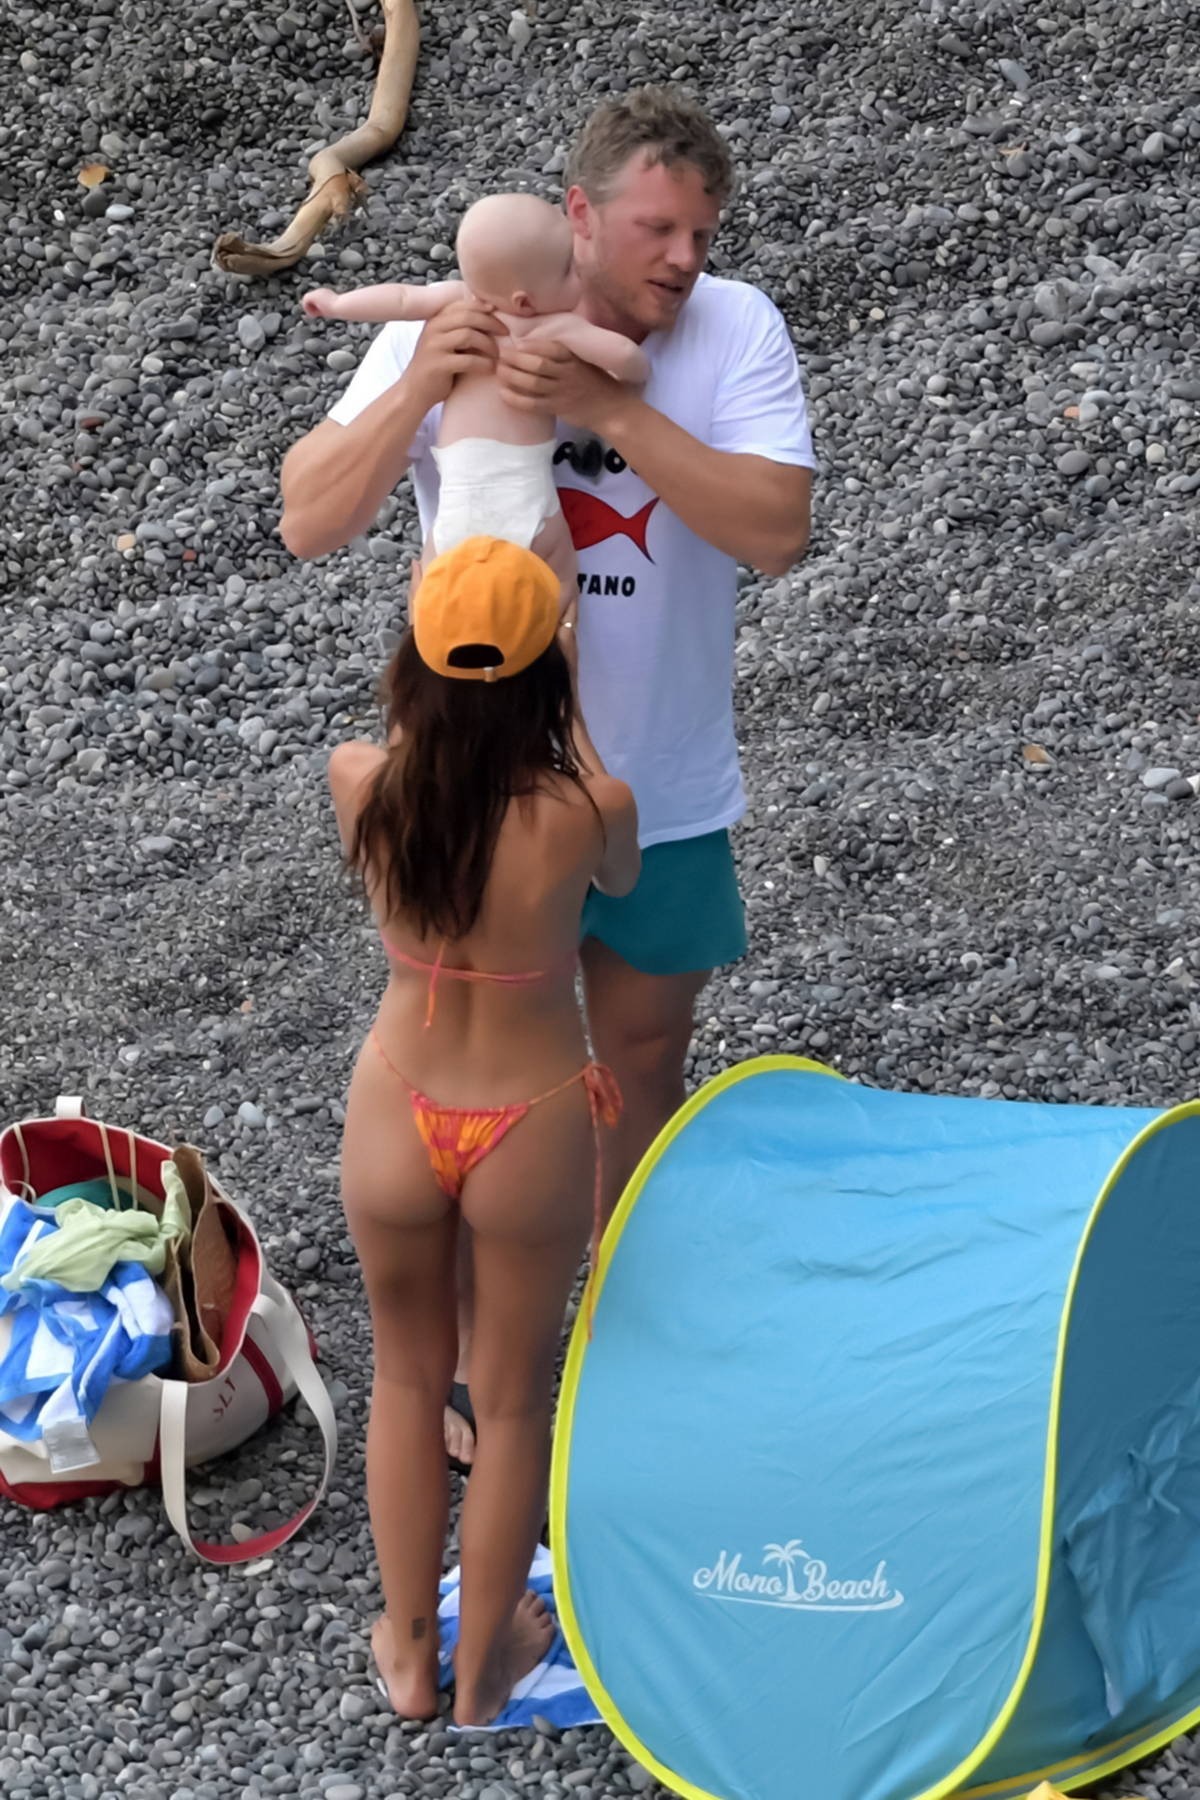 Emily Ratajkowski flaunts her bikini bod in Italy